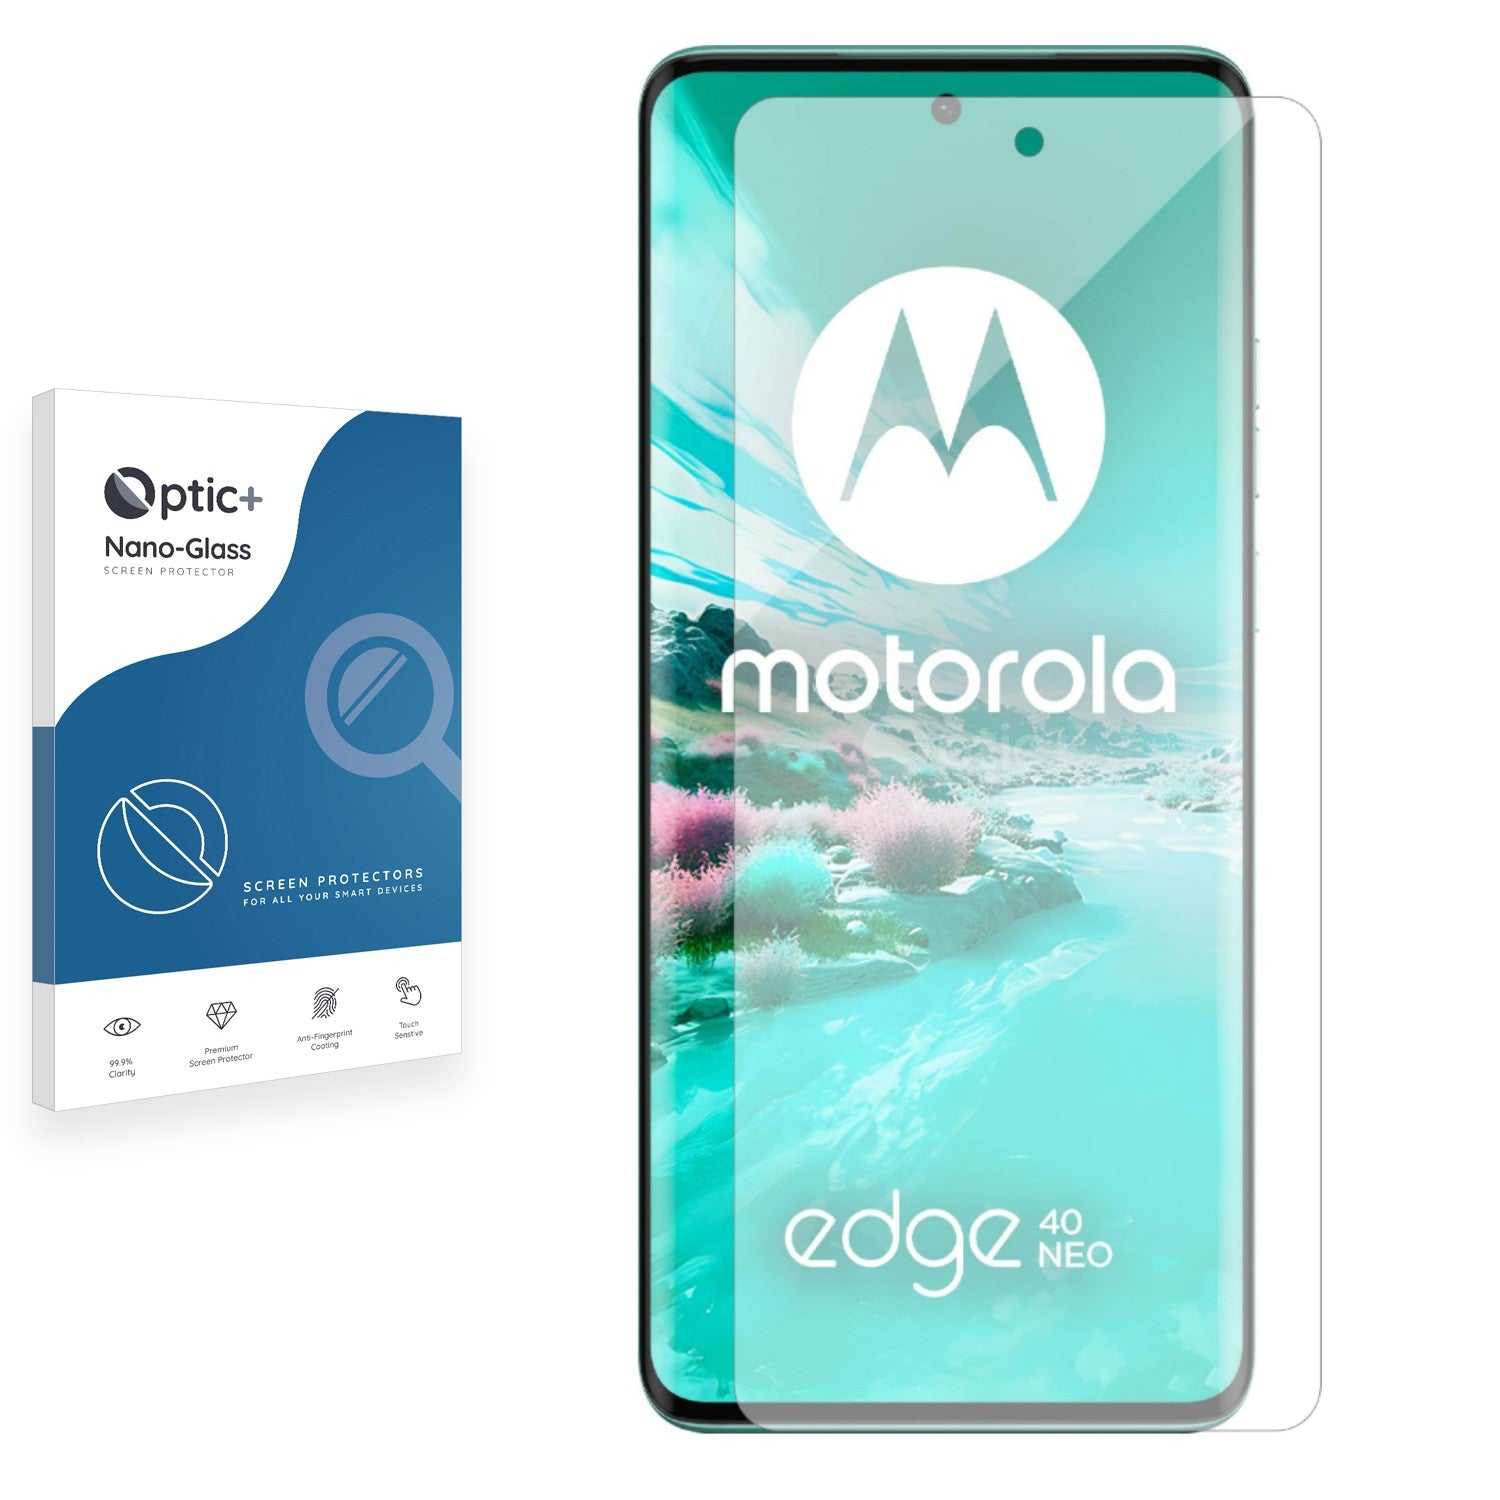 ScreenShield, Optic+ Nano Glass Screen Protector for Motorola Edge 40 Neo